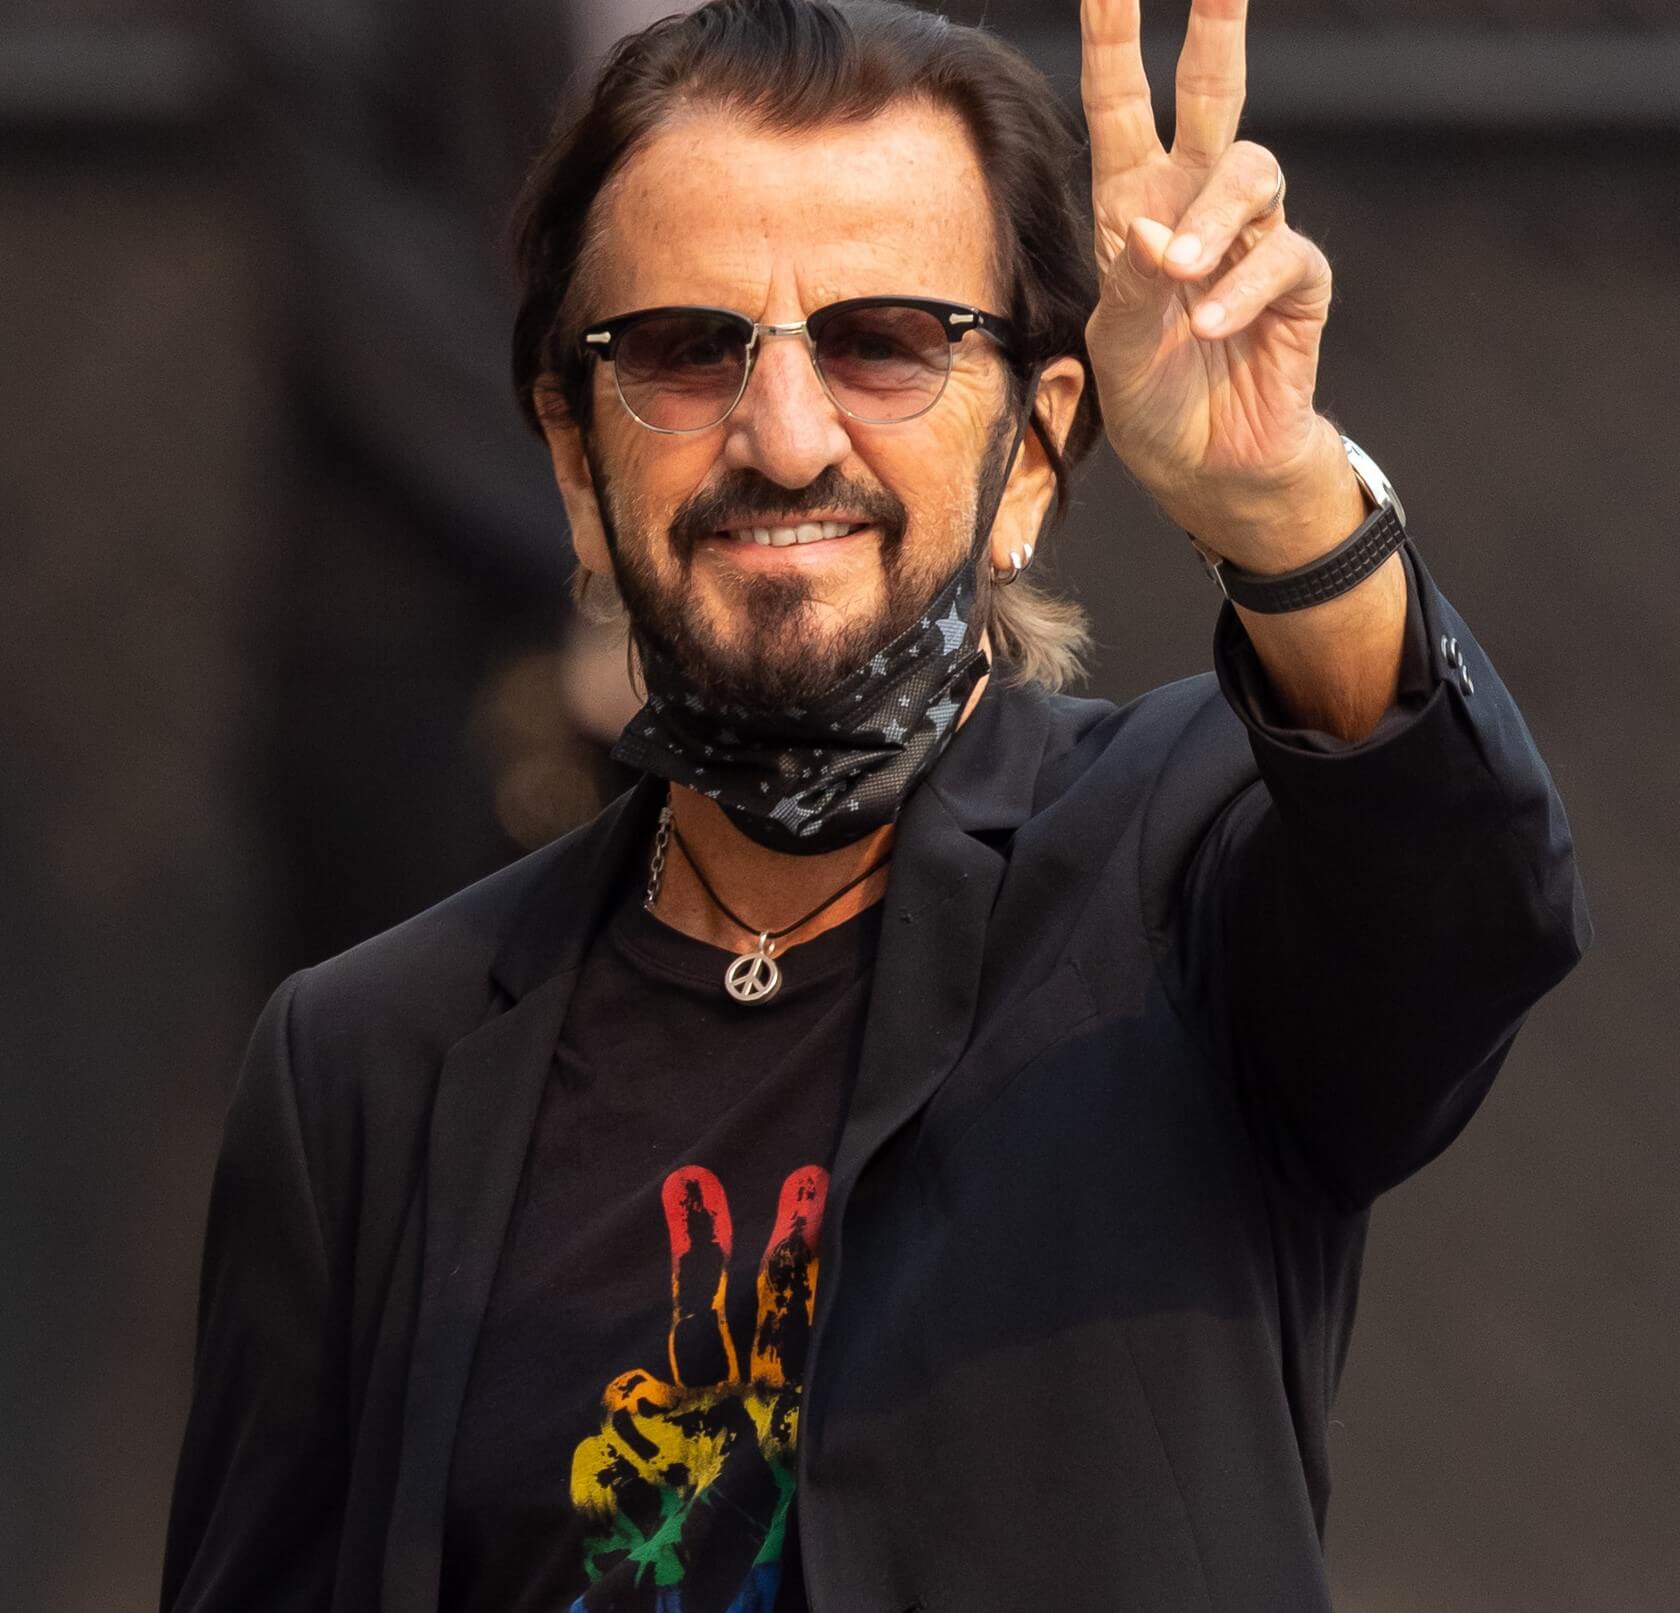 The Beatles' Ringo Starr raising his hand